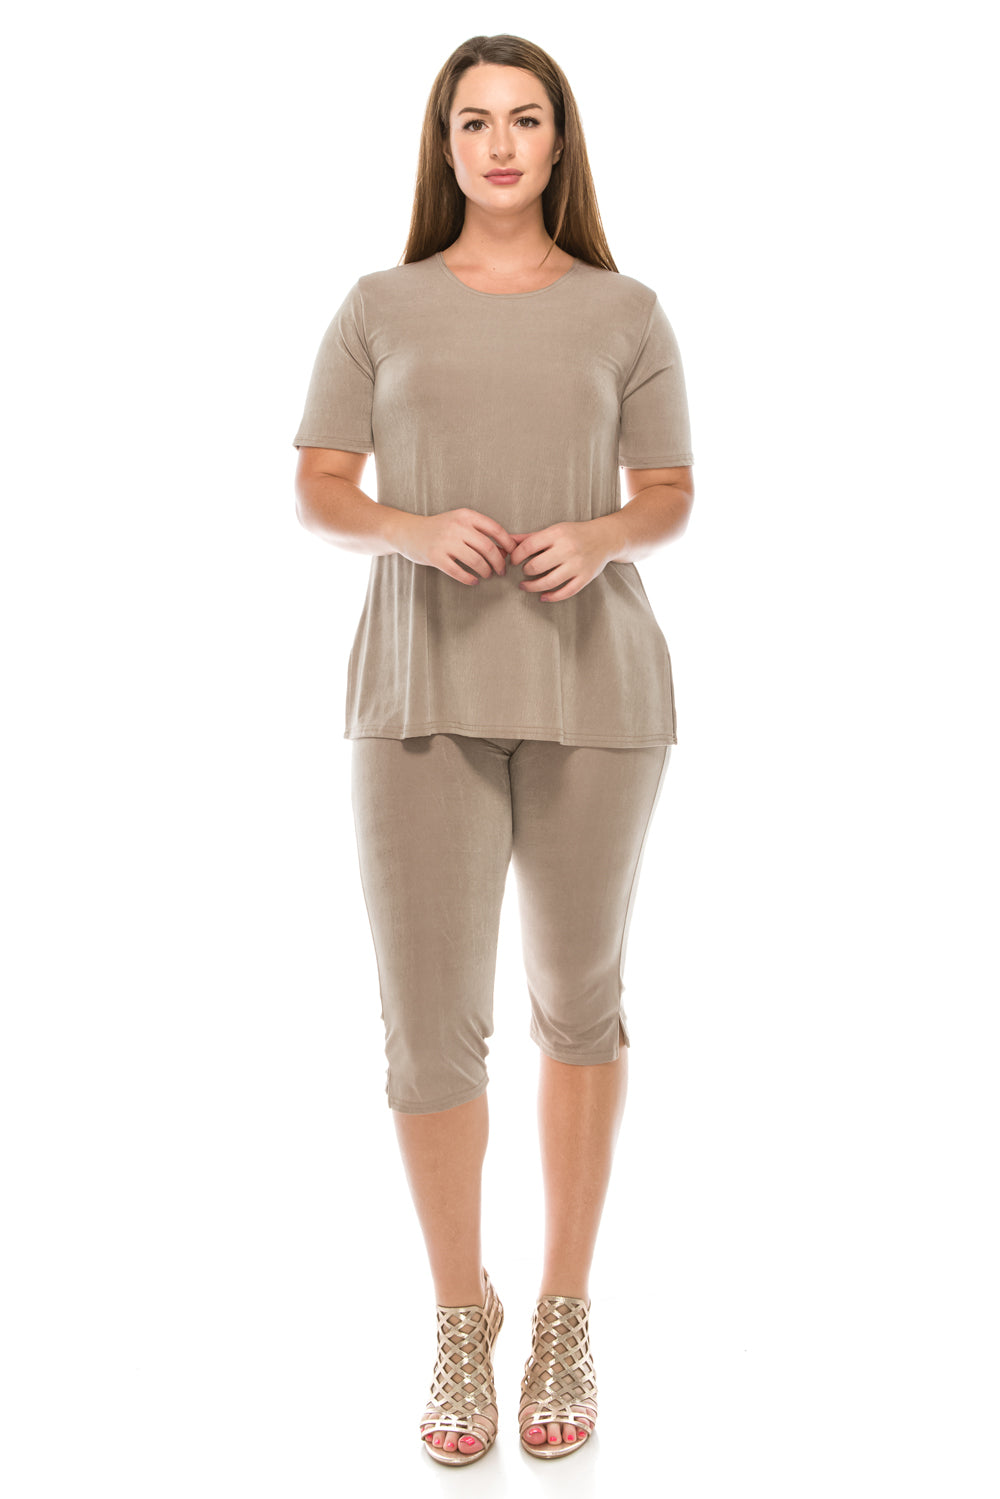 Jostar Women's Stretchy Capri Pant Set Short Sleeve in Plus Size, 903BN-SX - Jostar Online